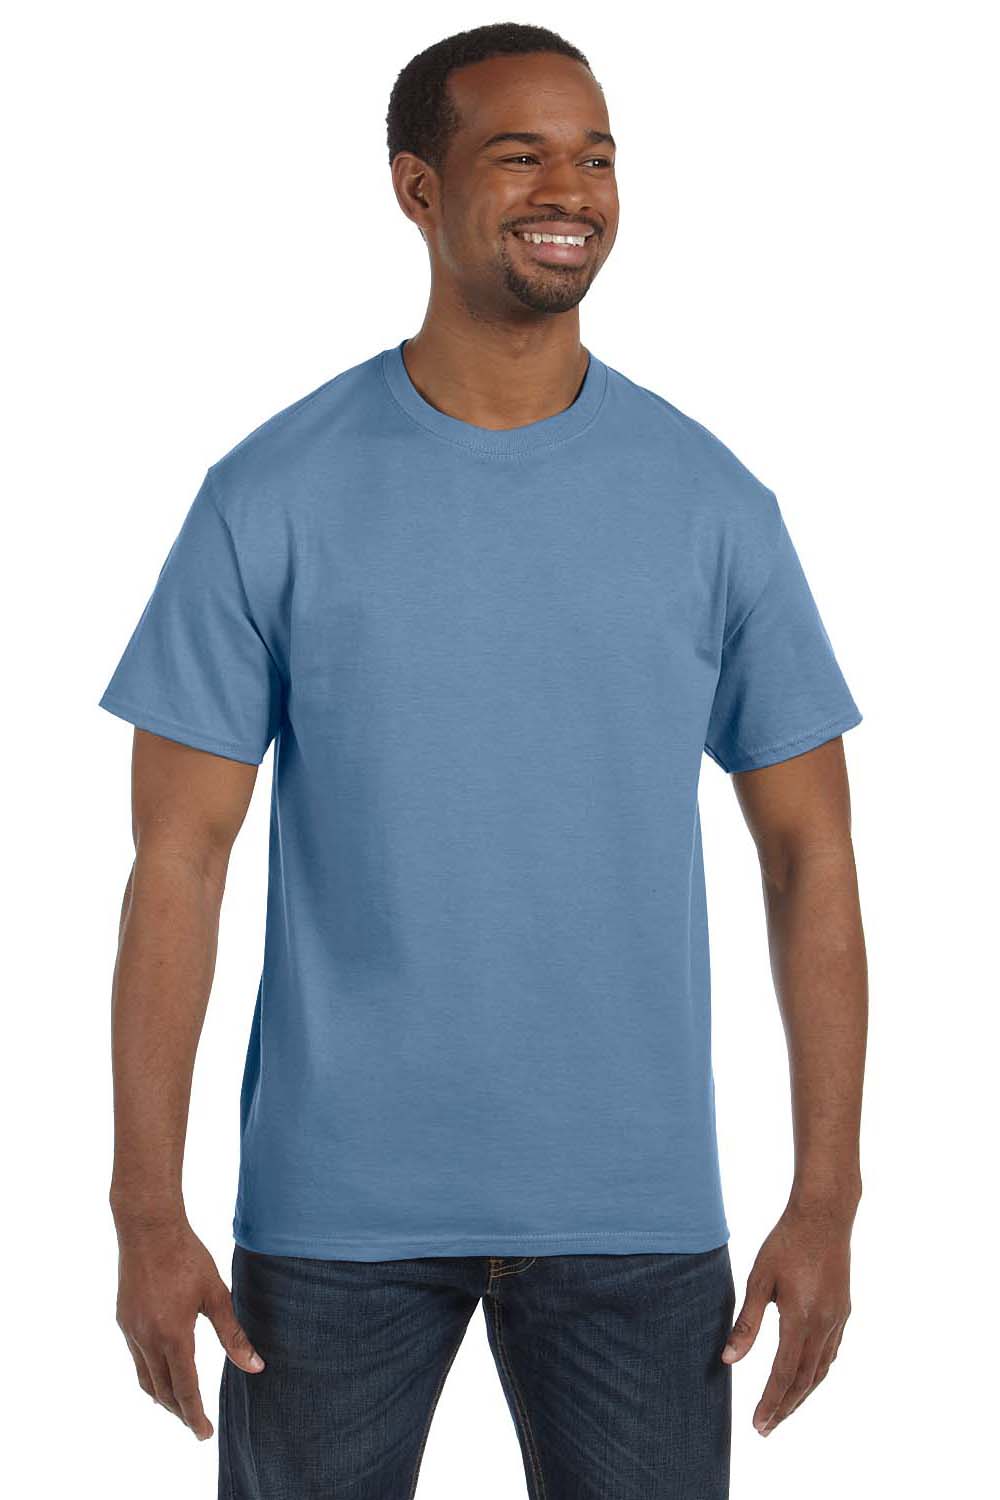 Hanes 5250T Mens ComfortSoft Short Sleeve Crewneck T-Shirt Stonewashed Blue Front